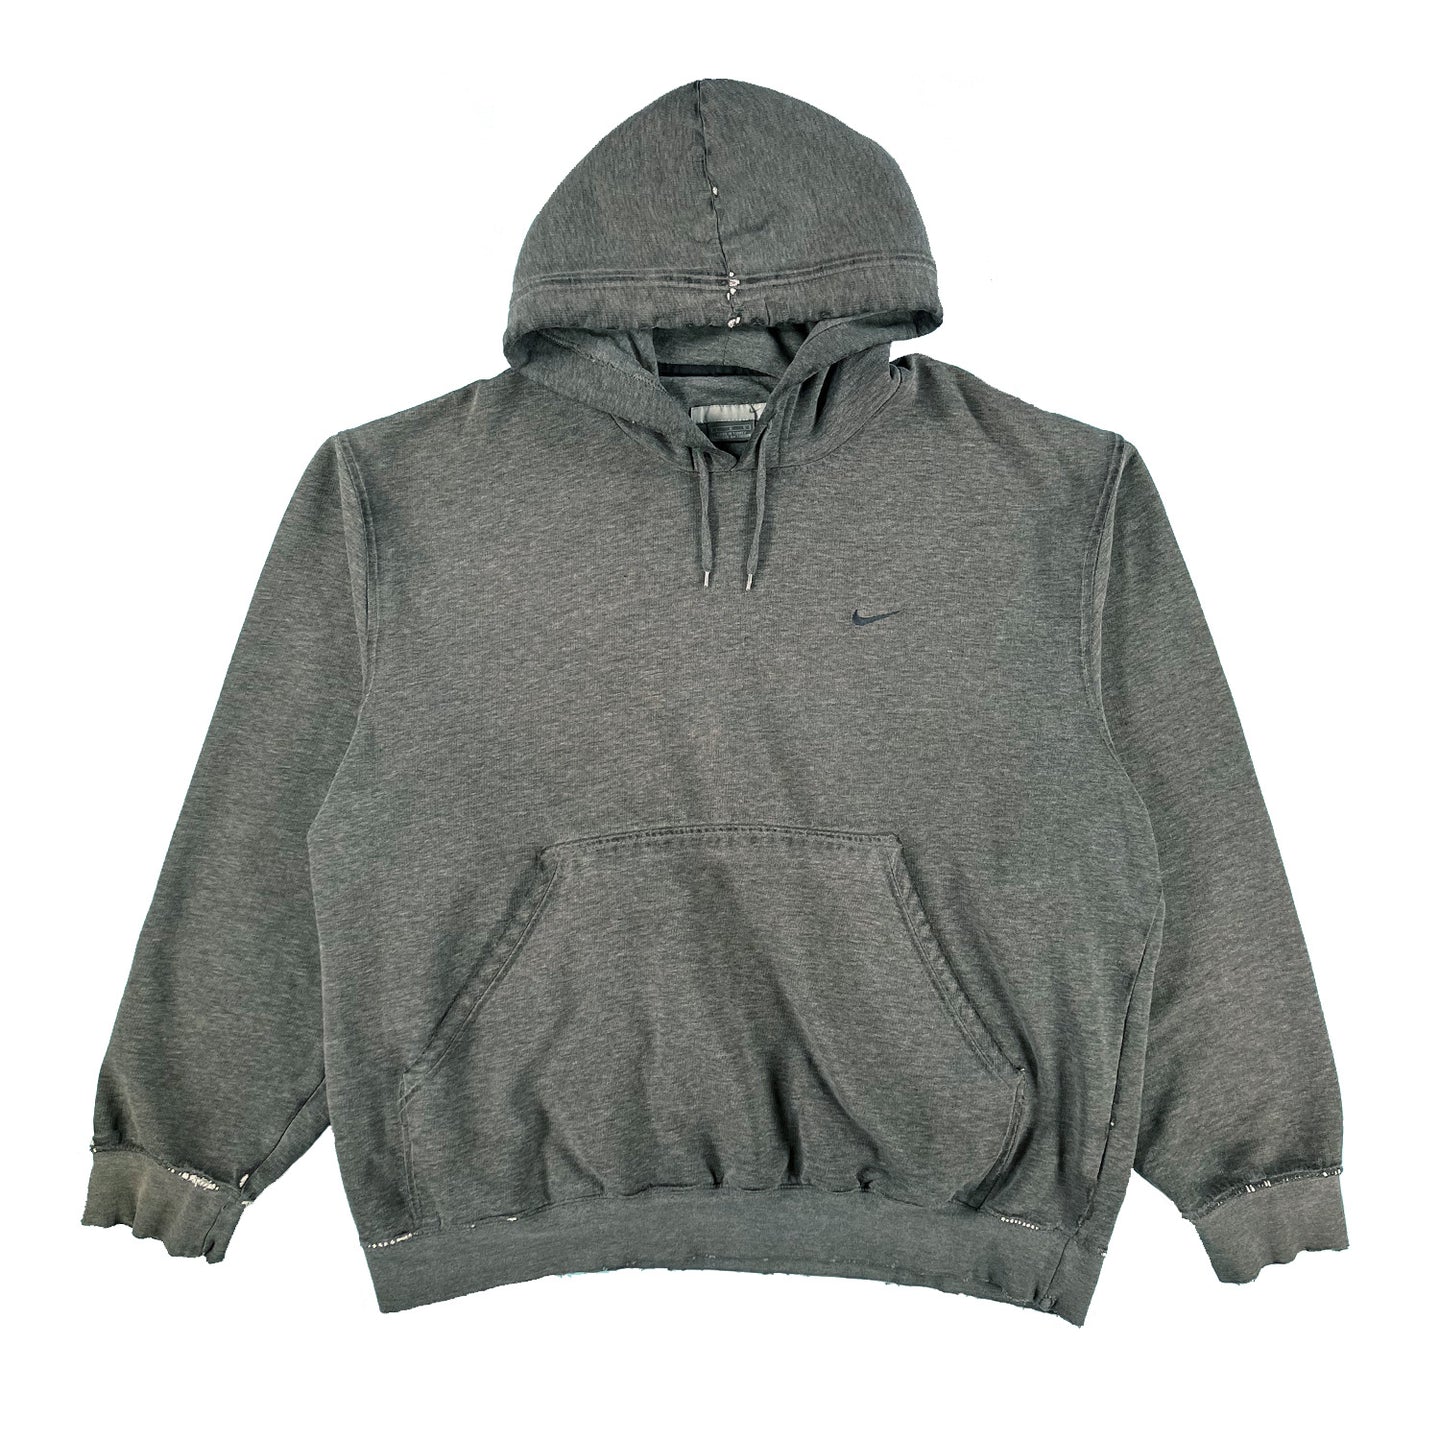 ‘00s Nike mini swoosh hoodie faded L